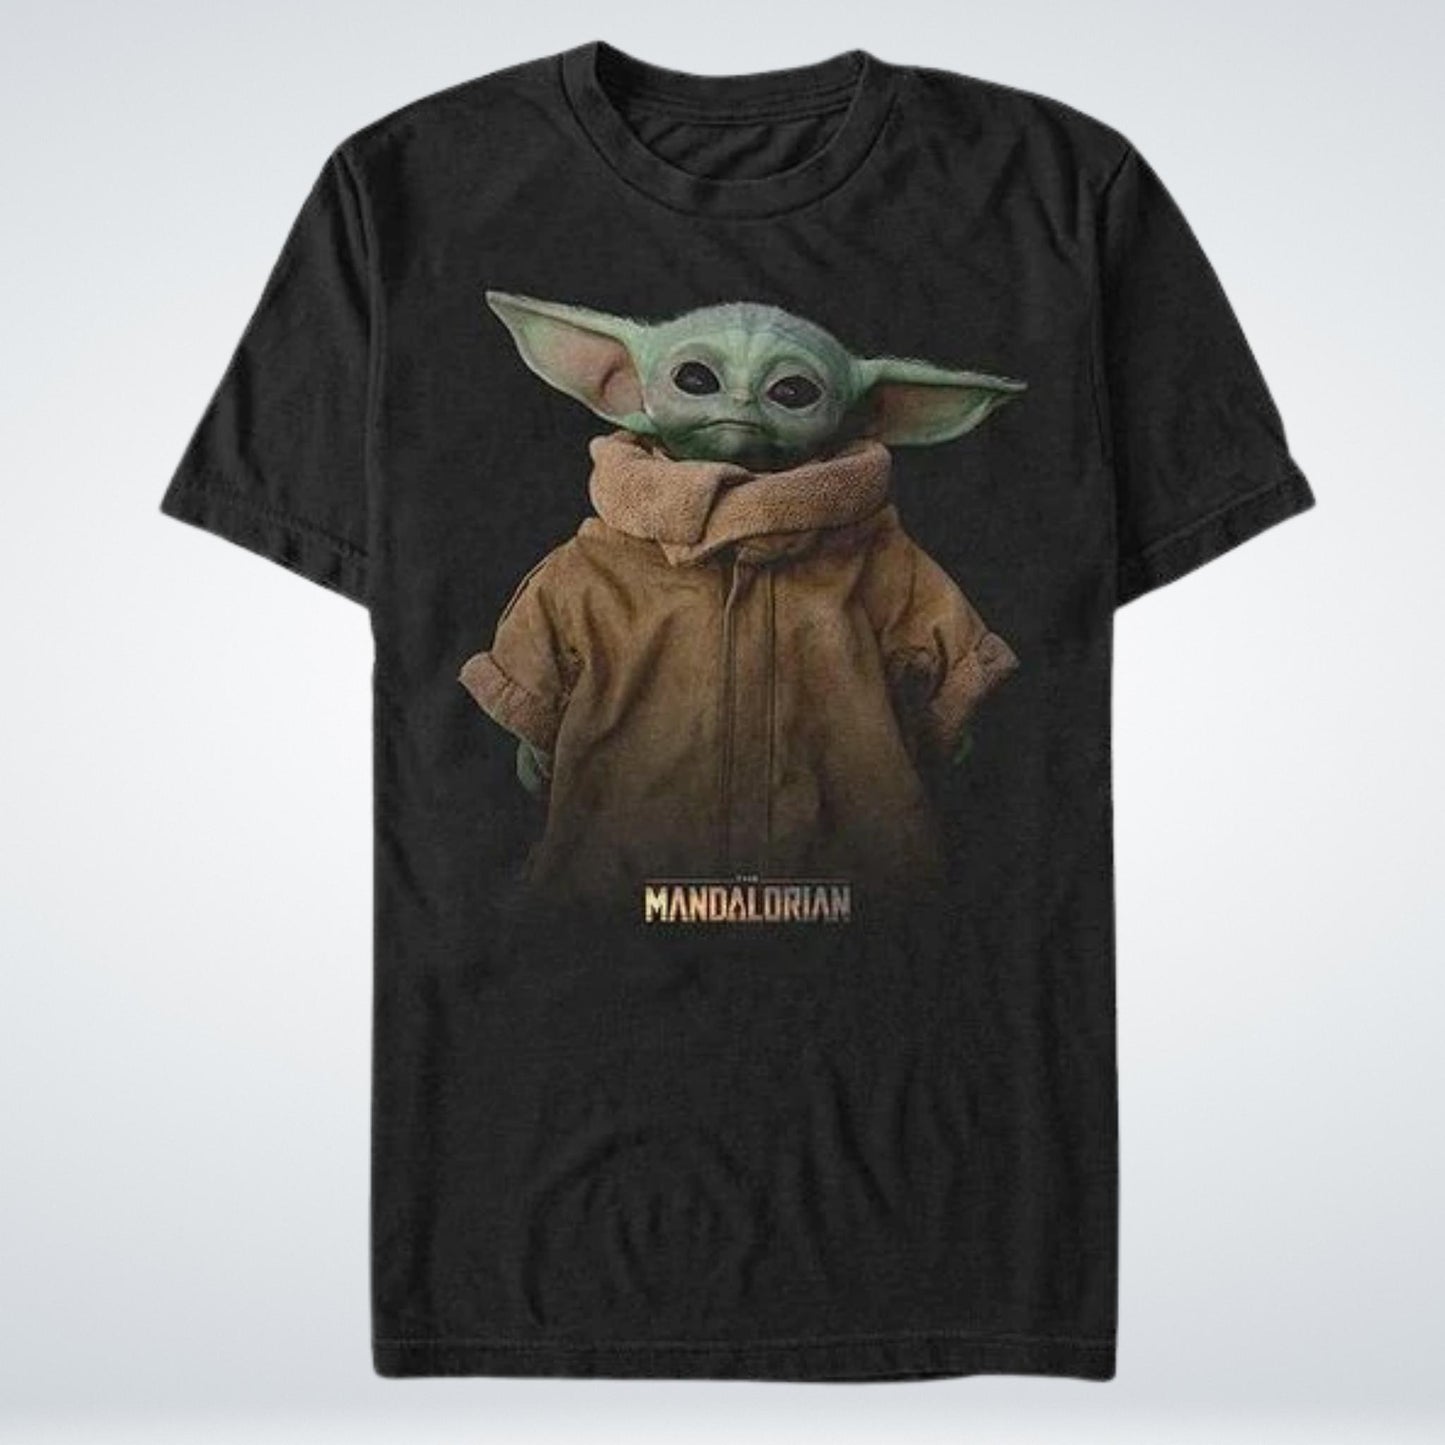 The Child Grogu Baby Yoda (Star Wars: The Mandalorian) Black Shirt